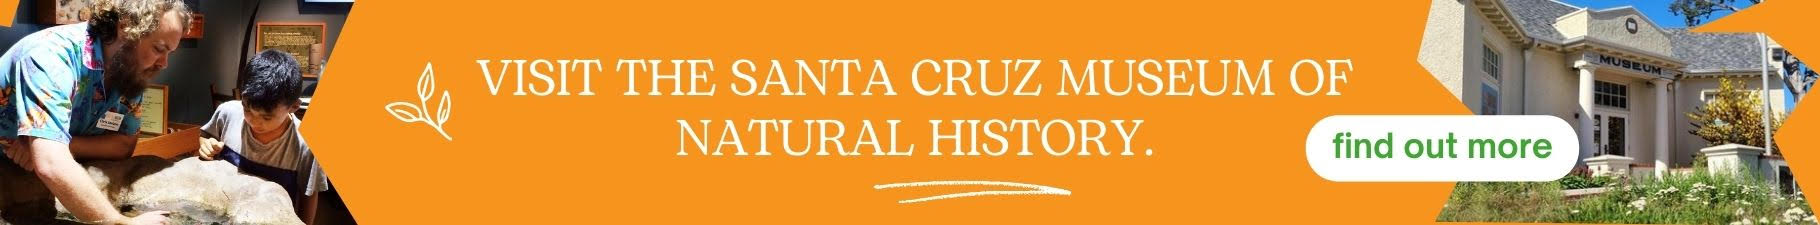 Ad for the Santa Cruz Museum of Natural History